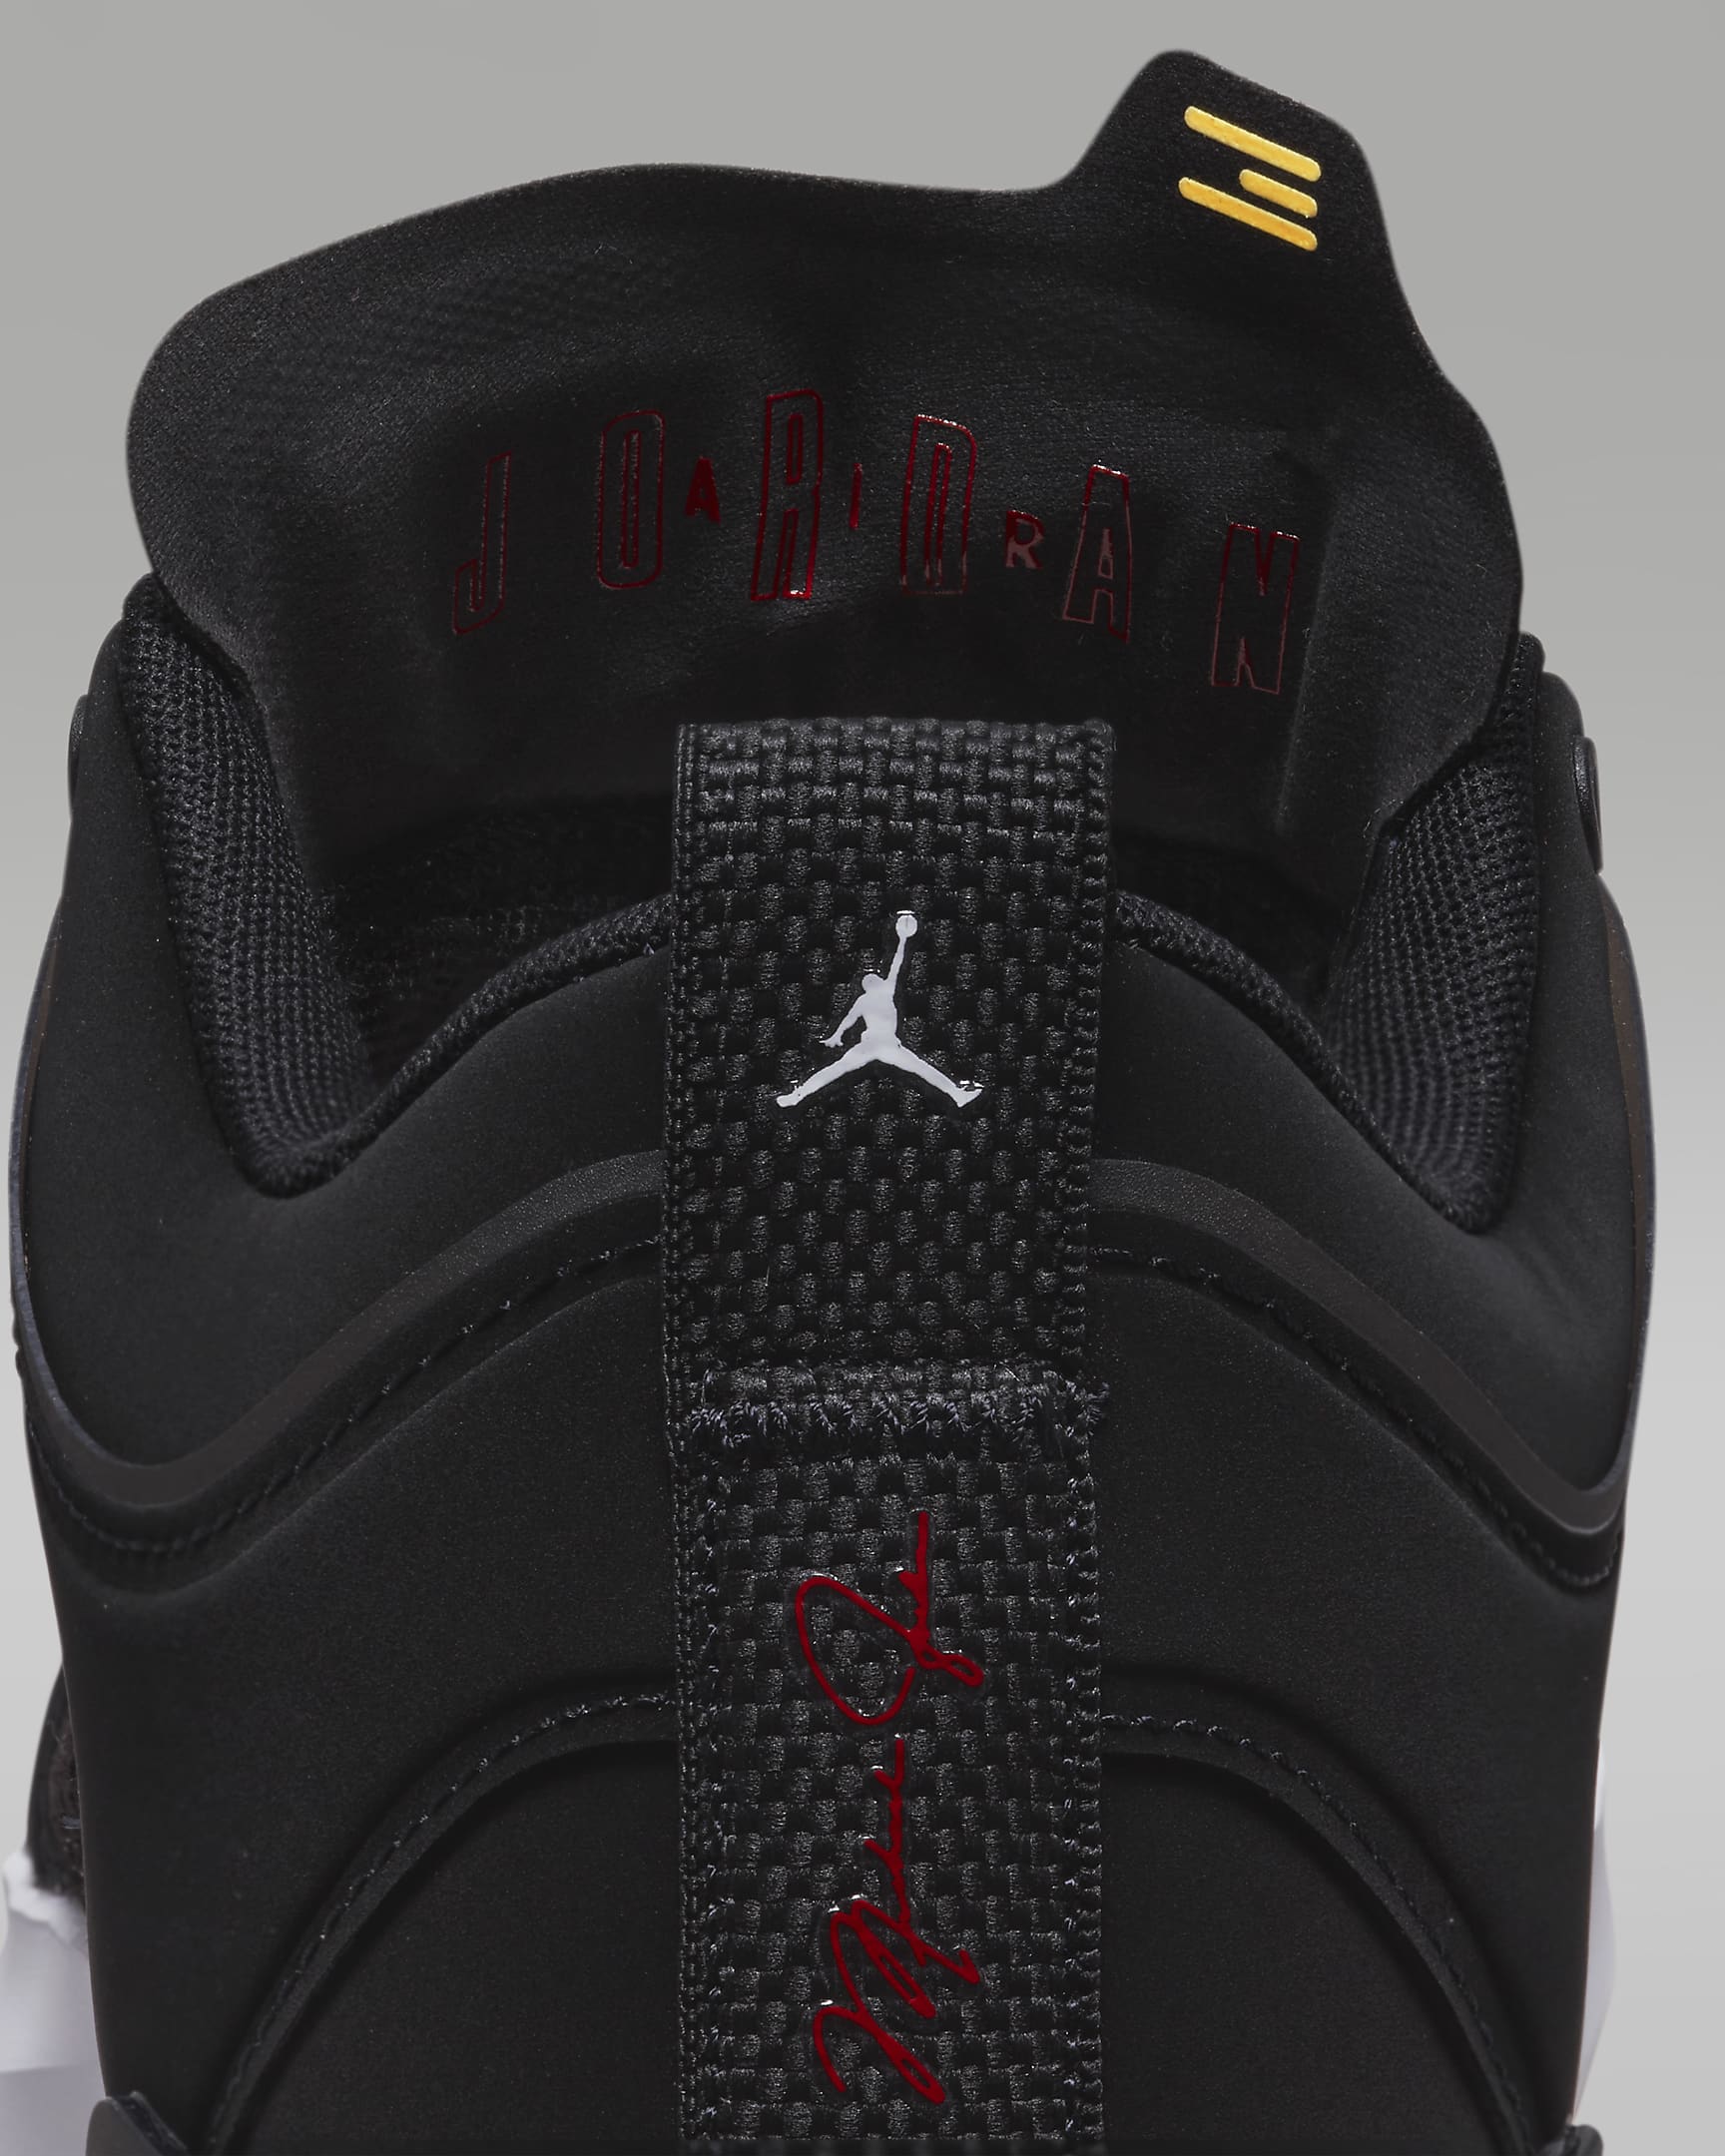 Air Jordan XXXVII Low PF Men's Basketball Shoes. Nike SG